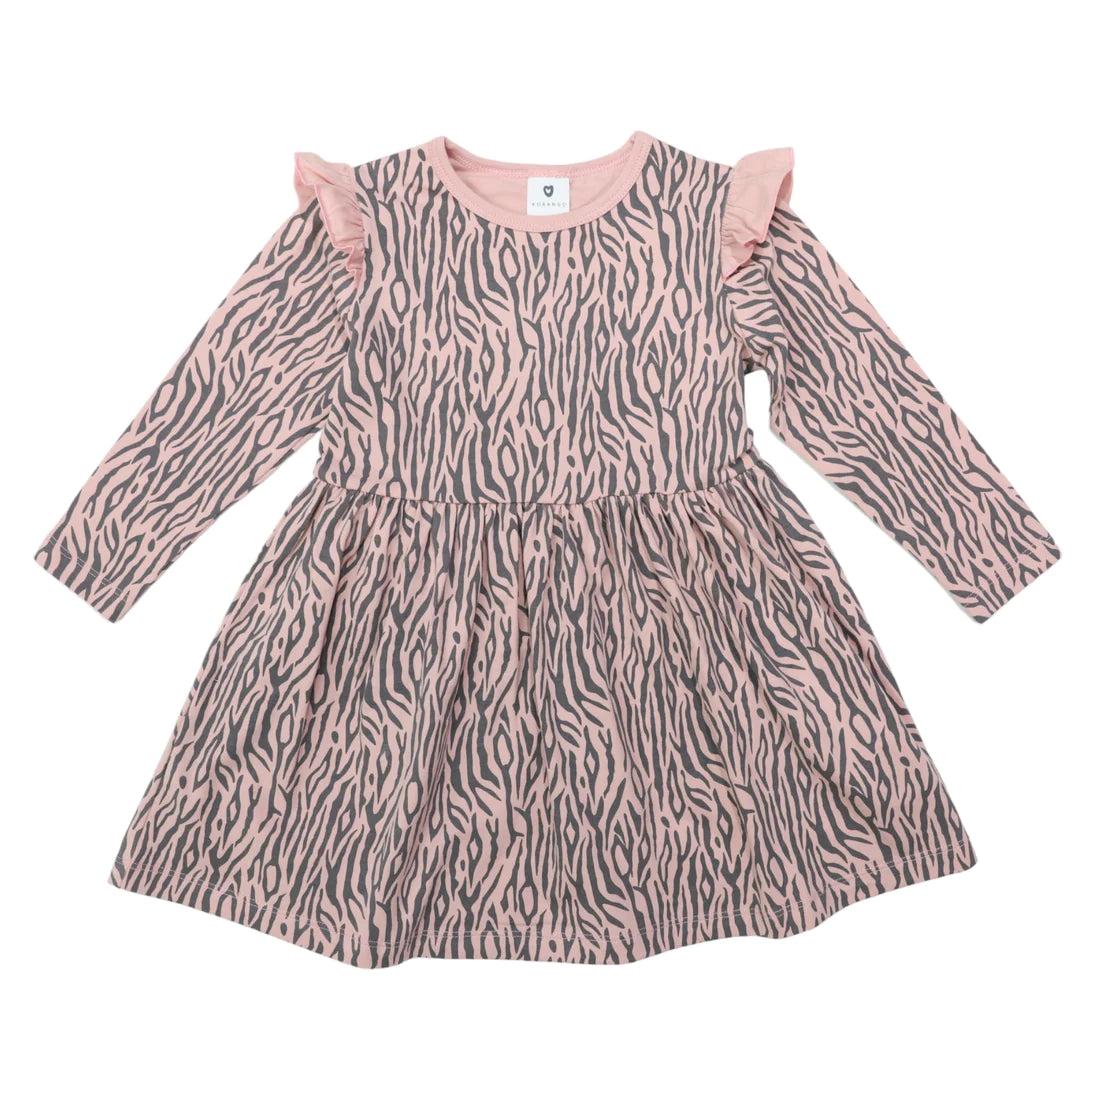 Korango Tiger Stripe Frill Dress - Dusty Pink